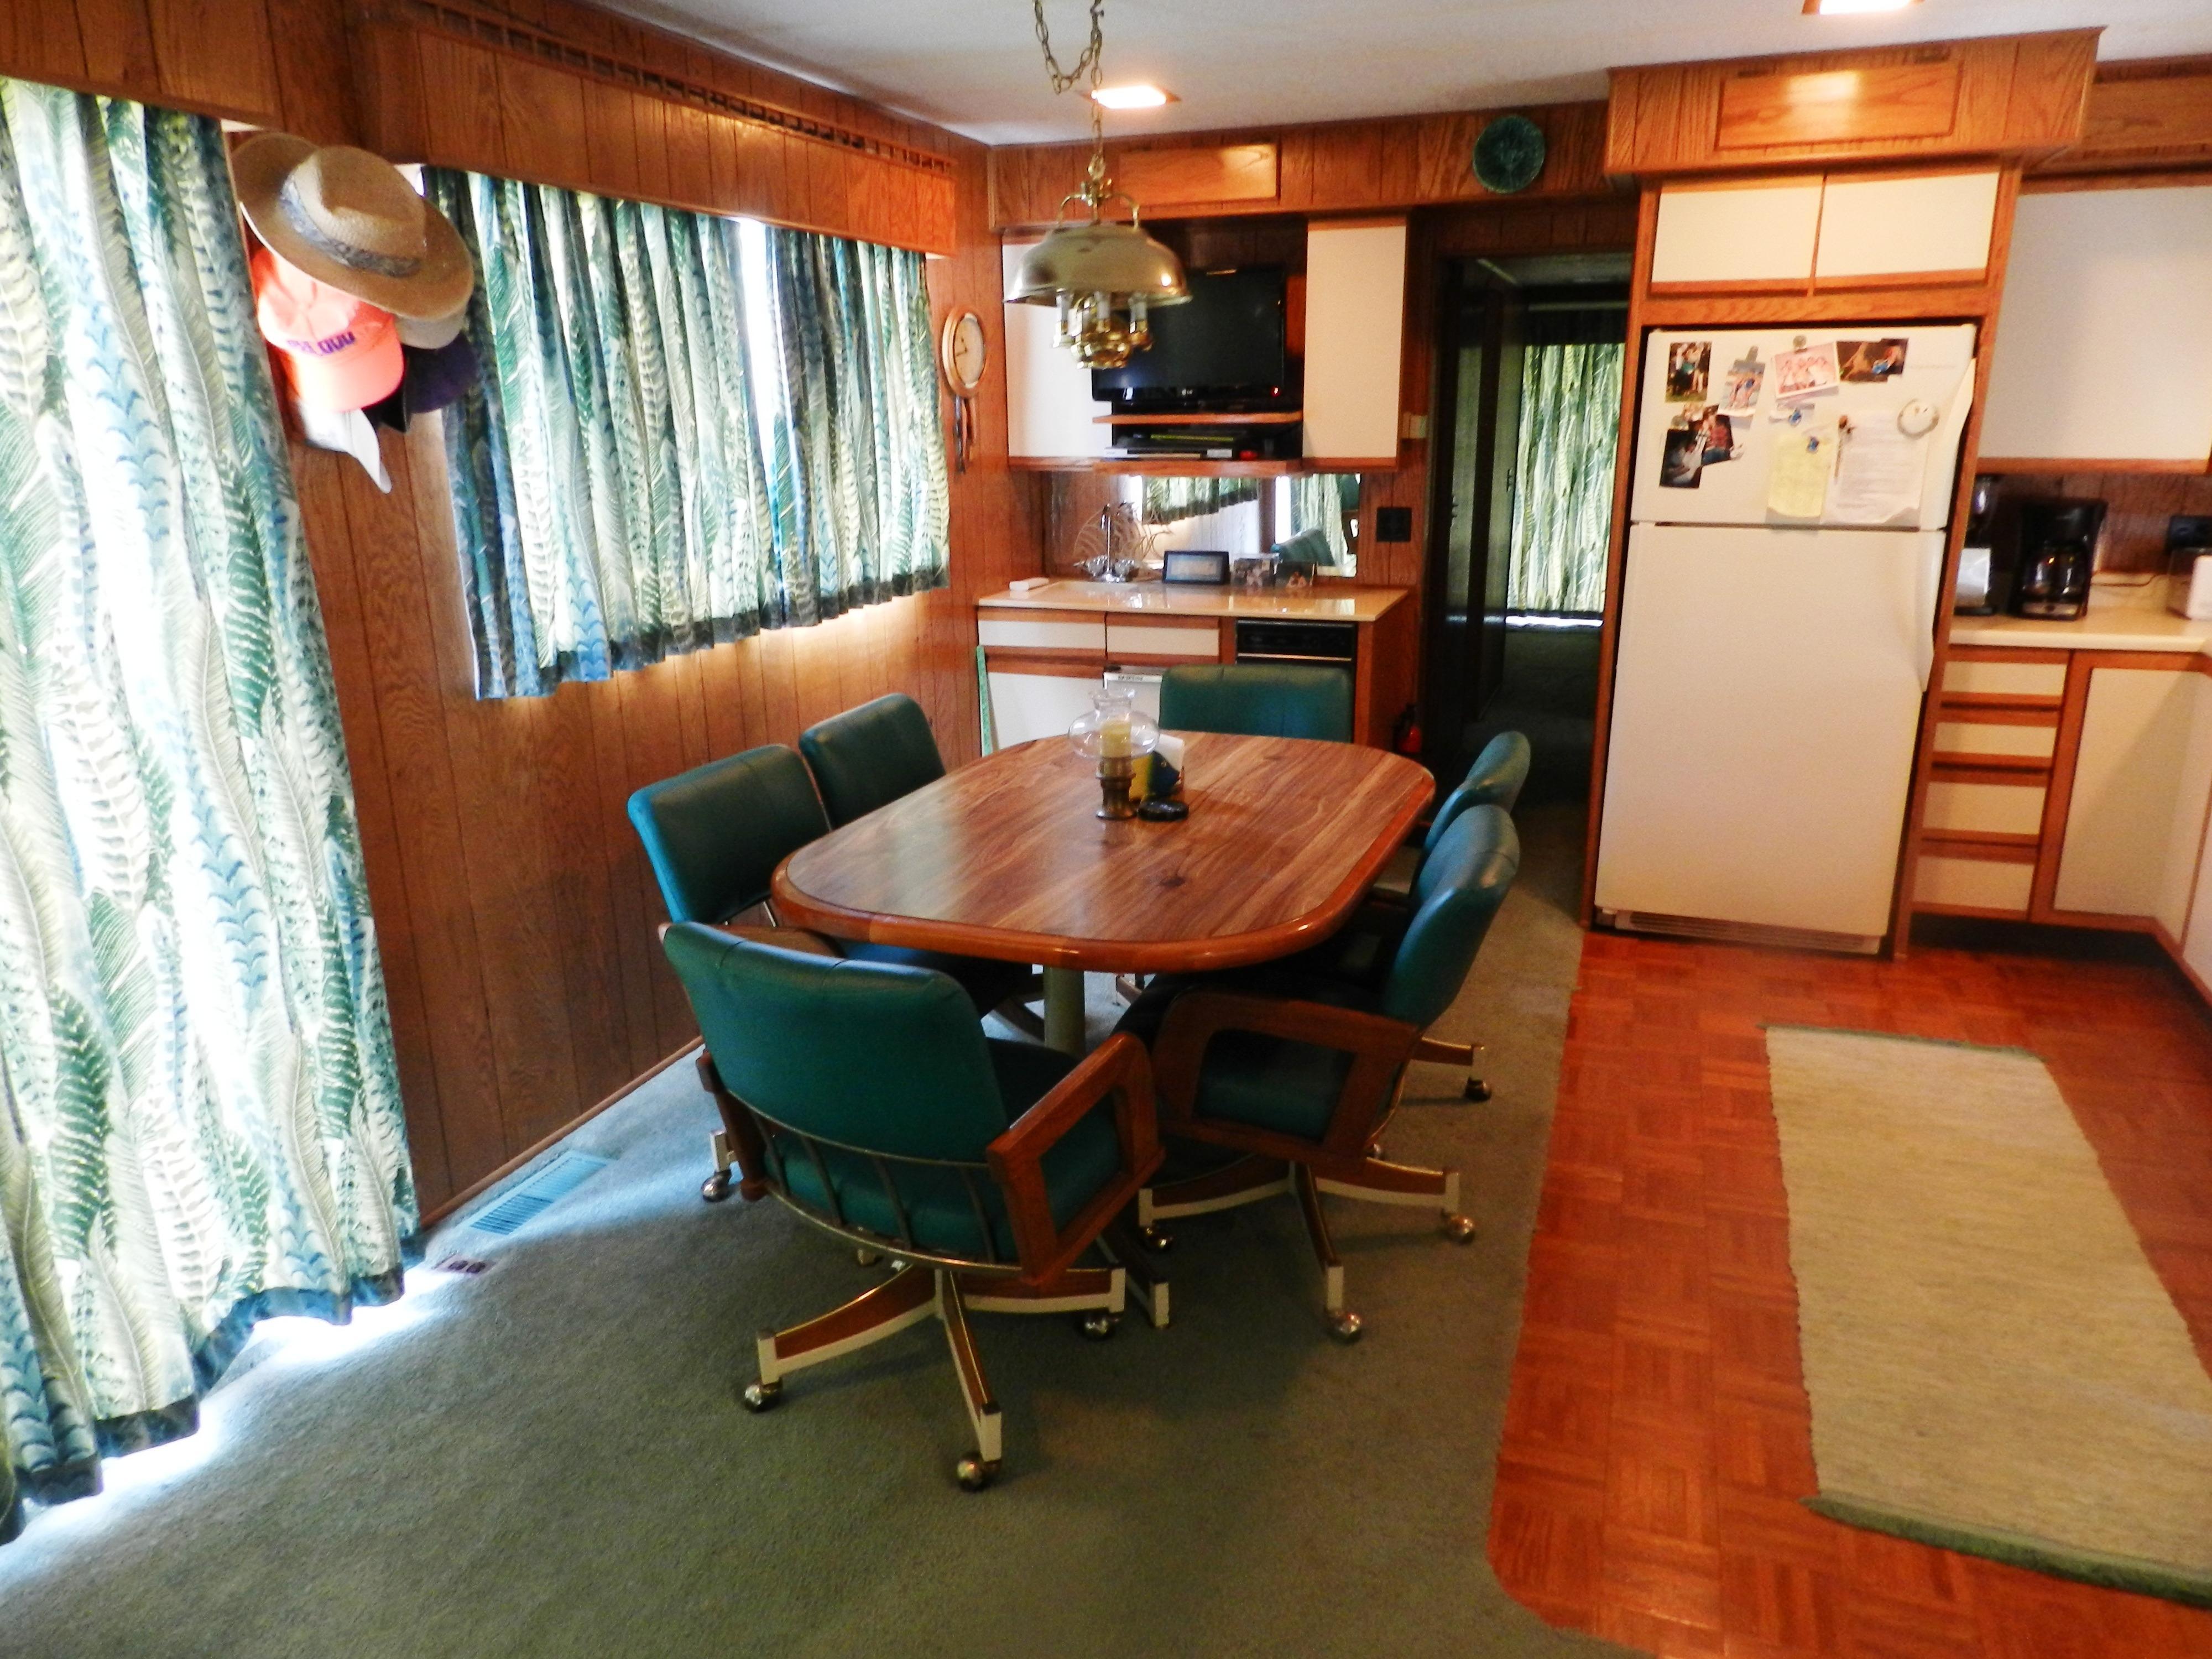 Sumerset 16' x 65' Houseboat, Lake Cumberland